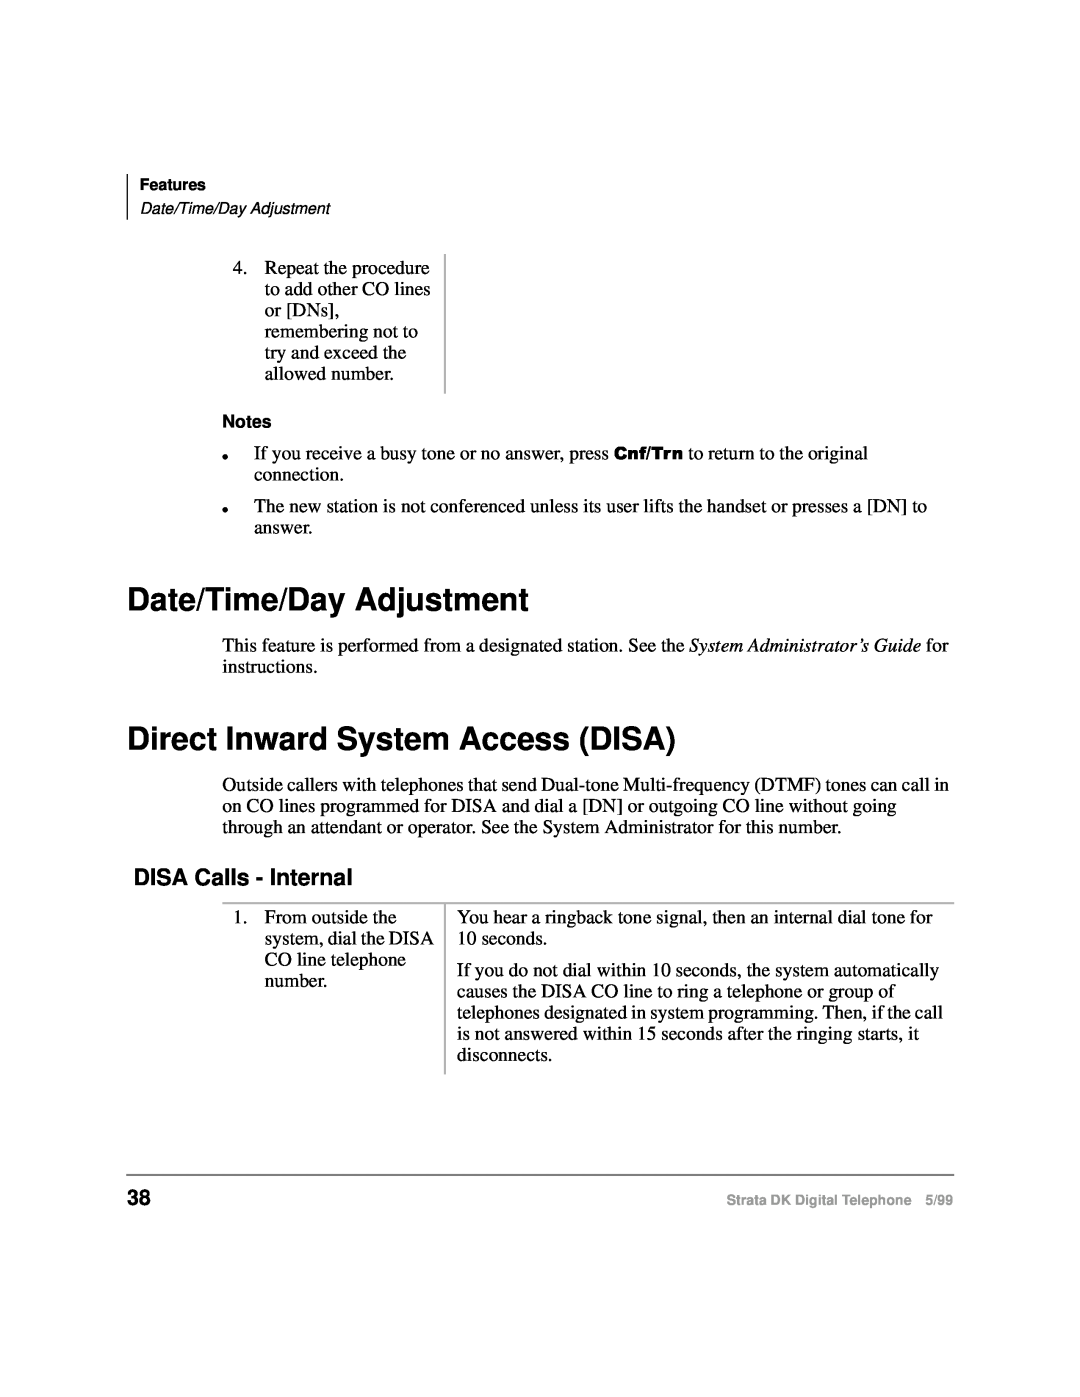 Toshiba CT manual Date/Time/Day Adjustment, Direct Inward System Access DISA, DISA Calls - Internal 